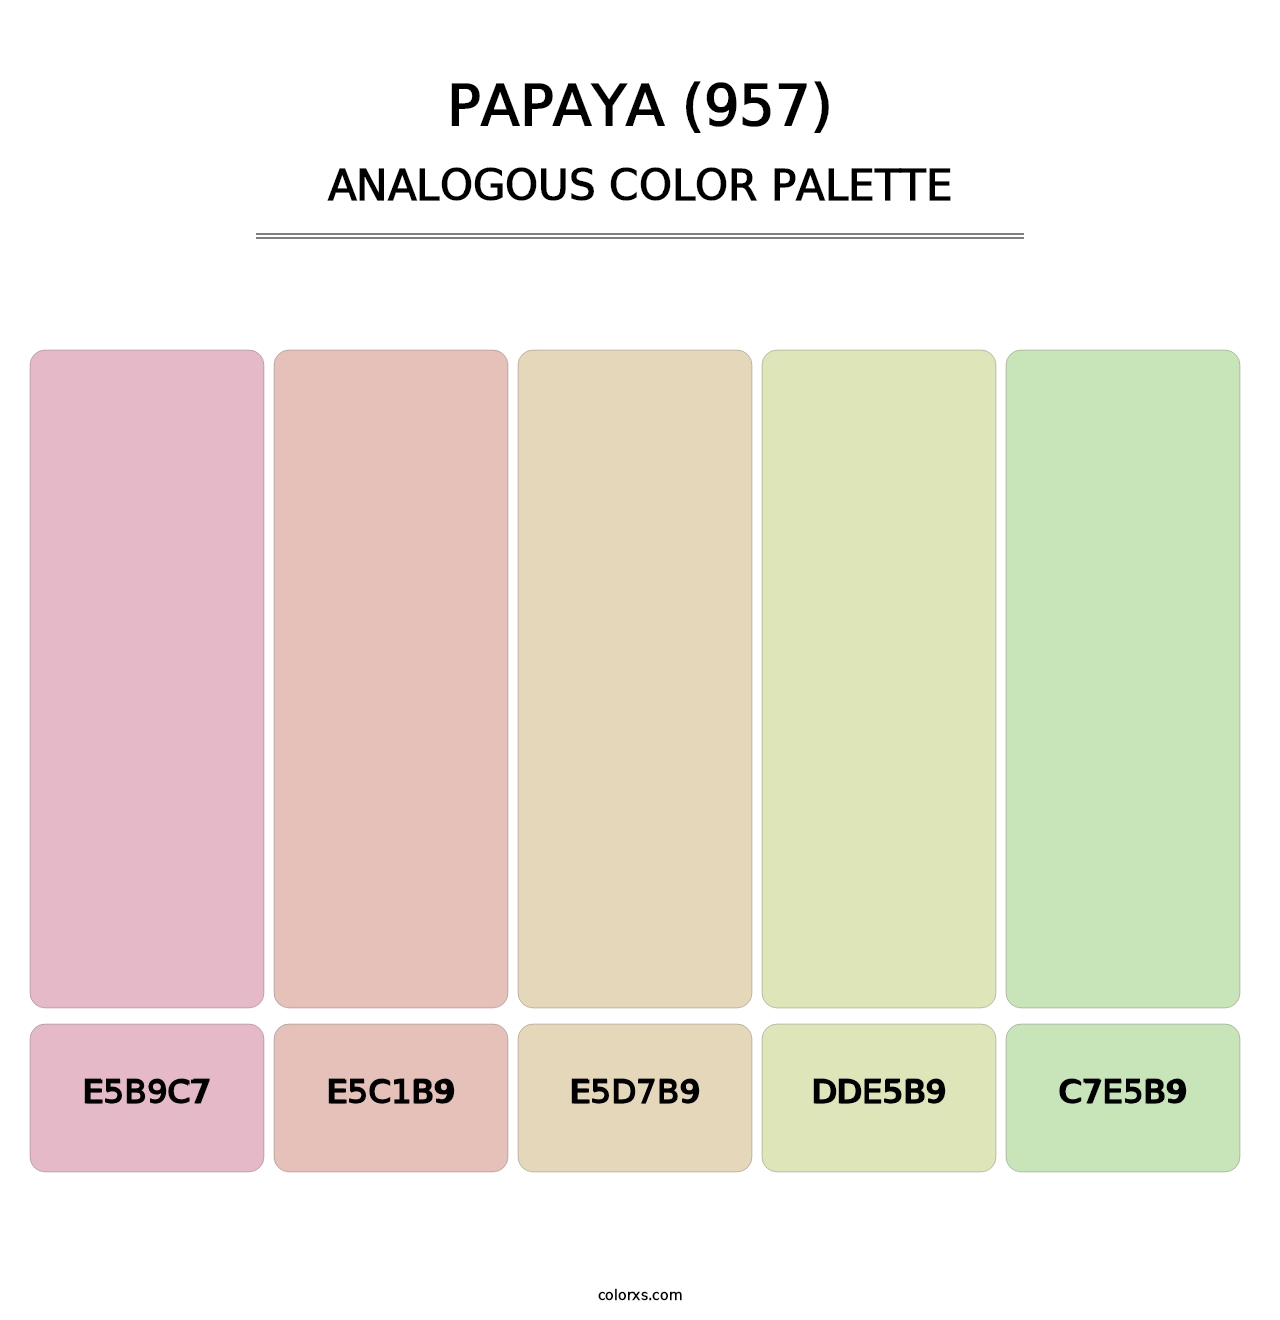 Papaya (957) - Analogous Color Palette